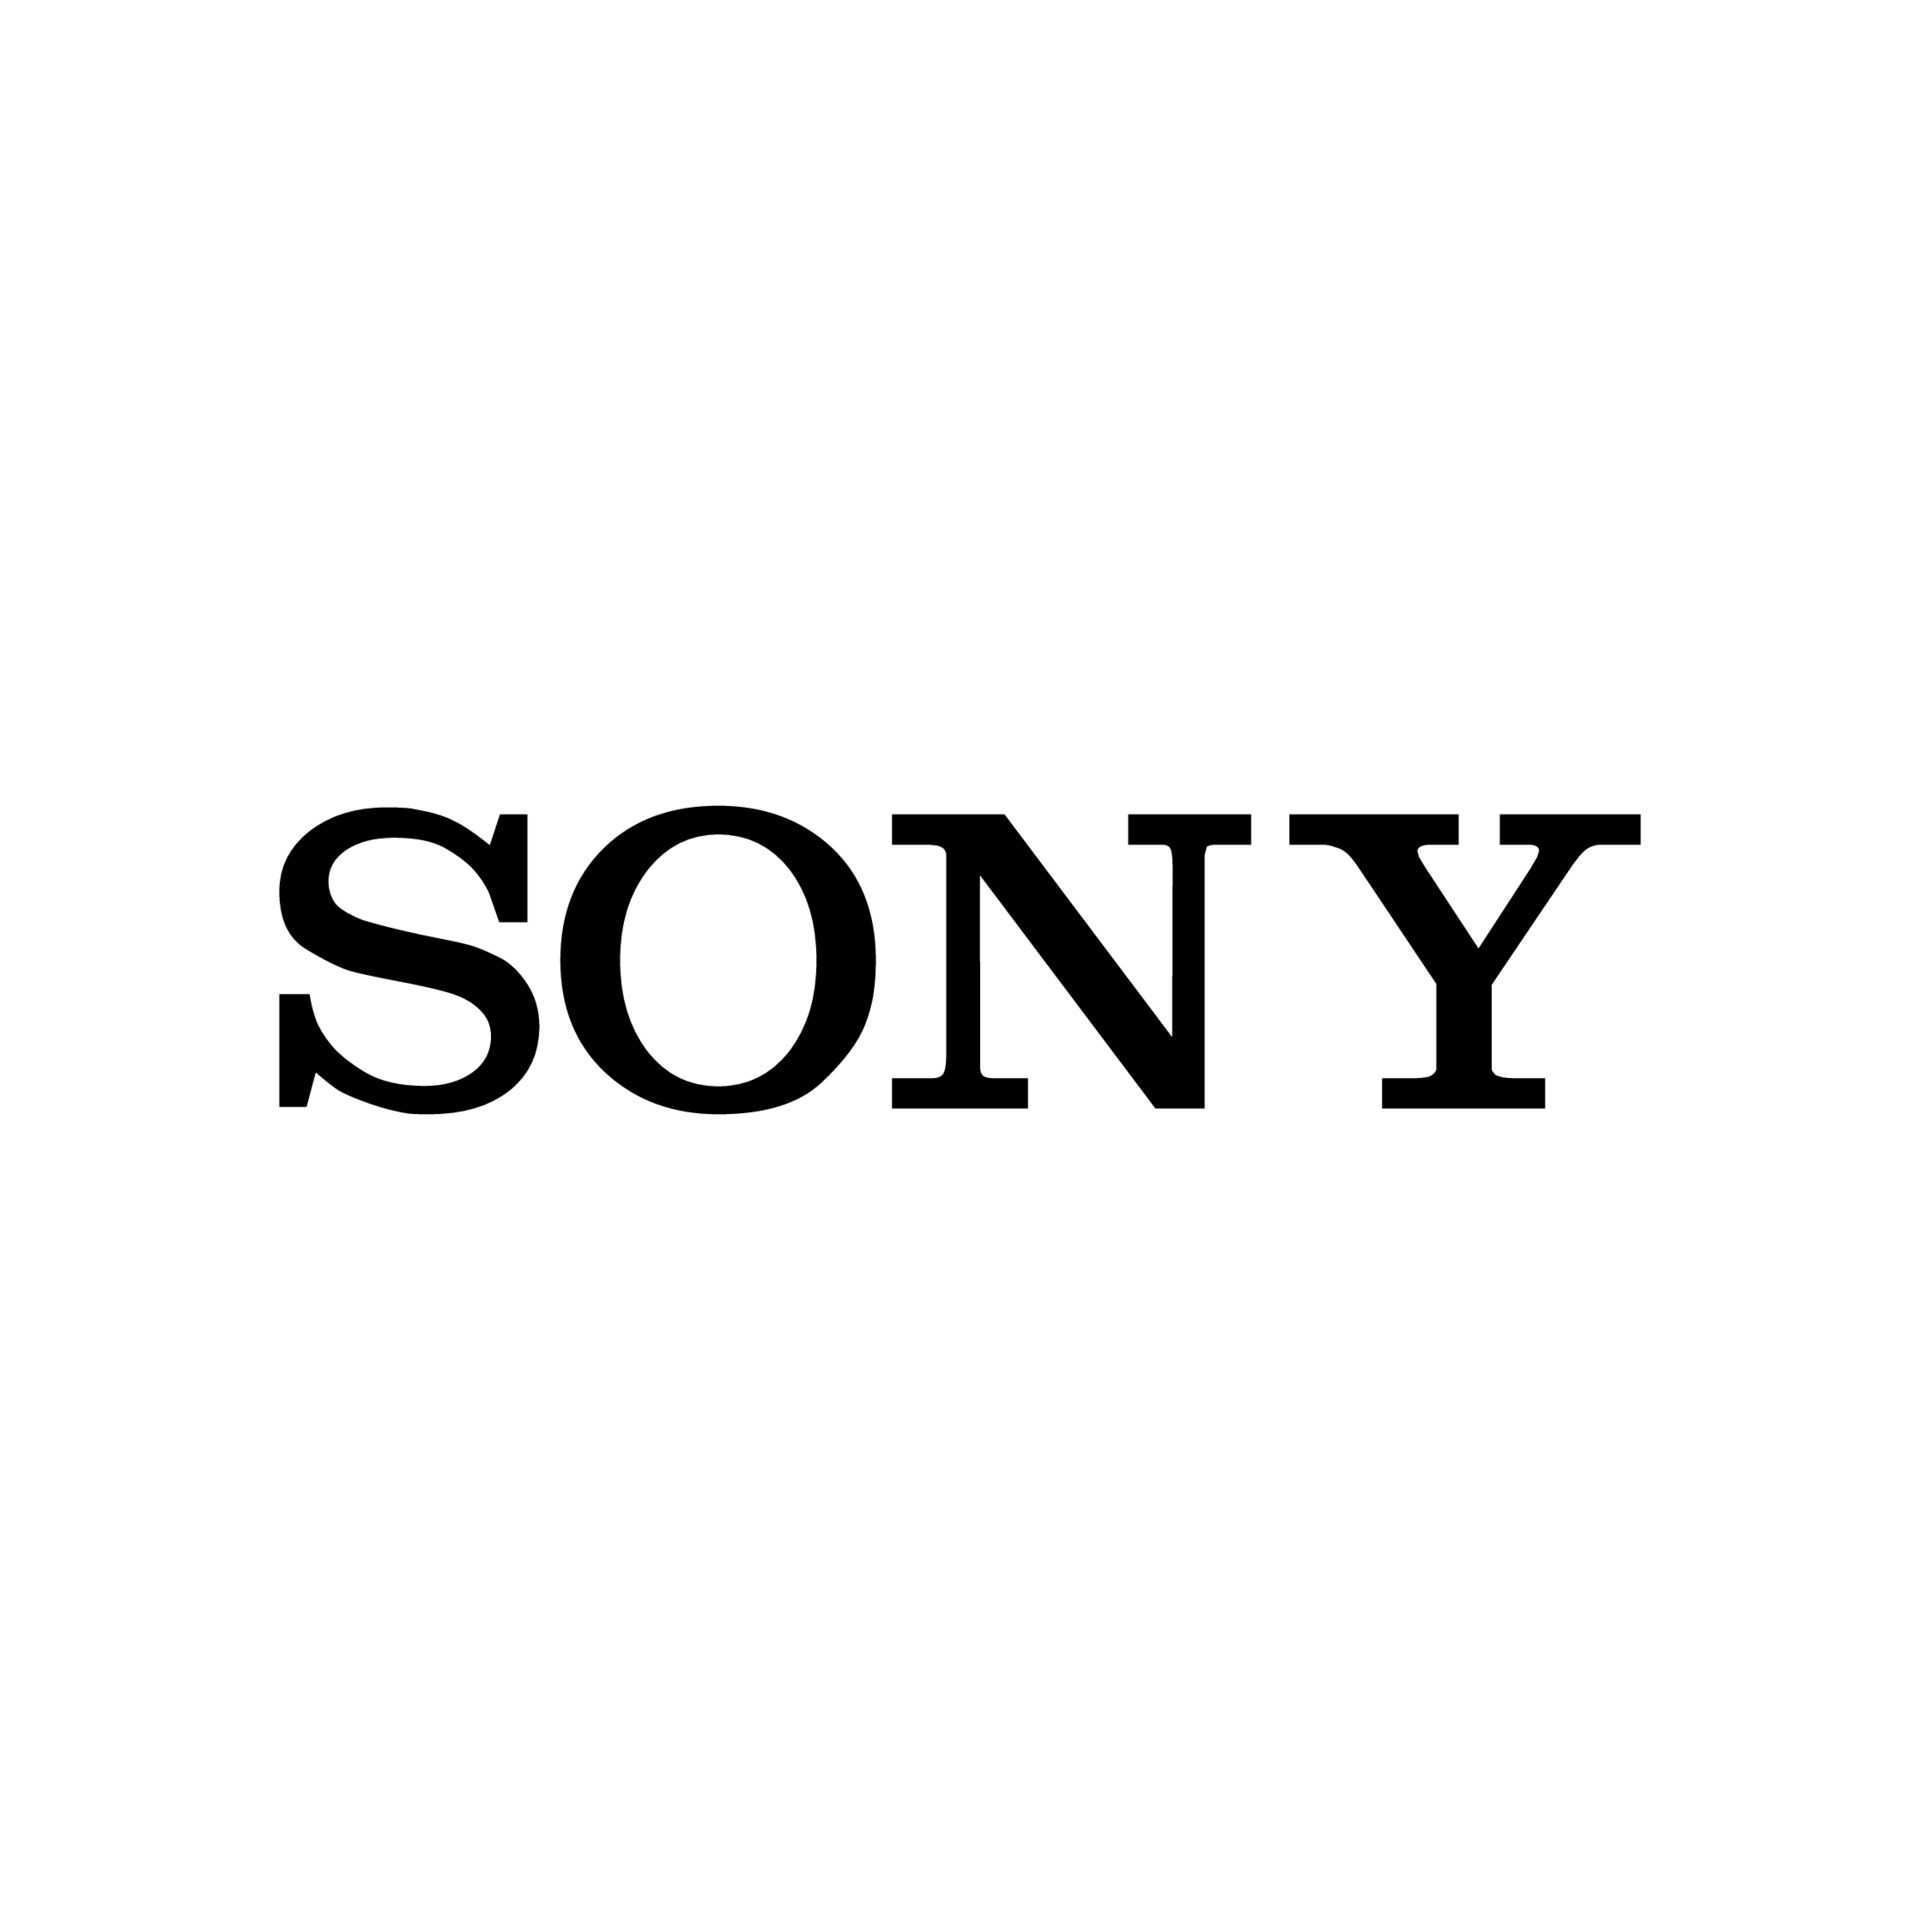 sony-logo-editorial-free-vector